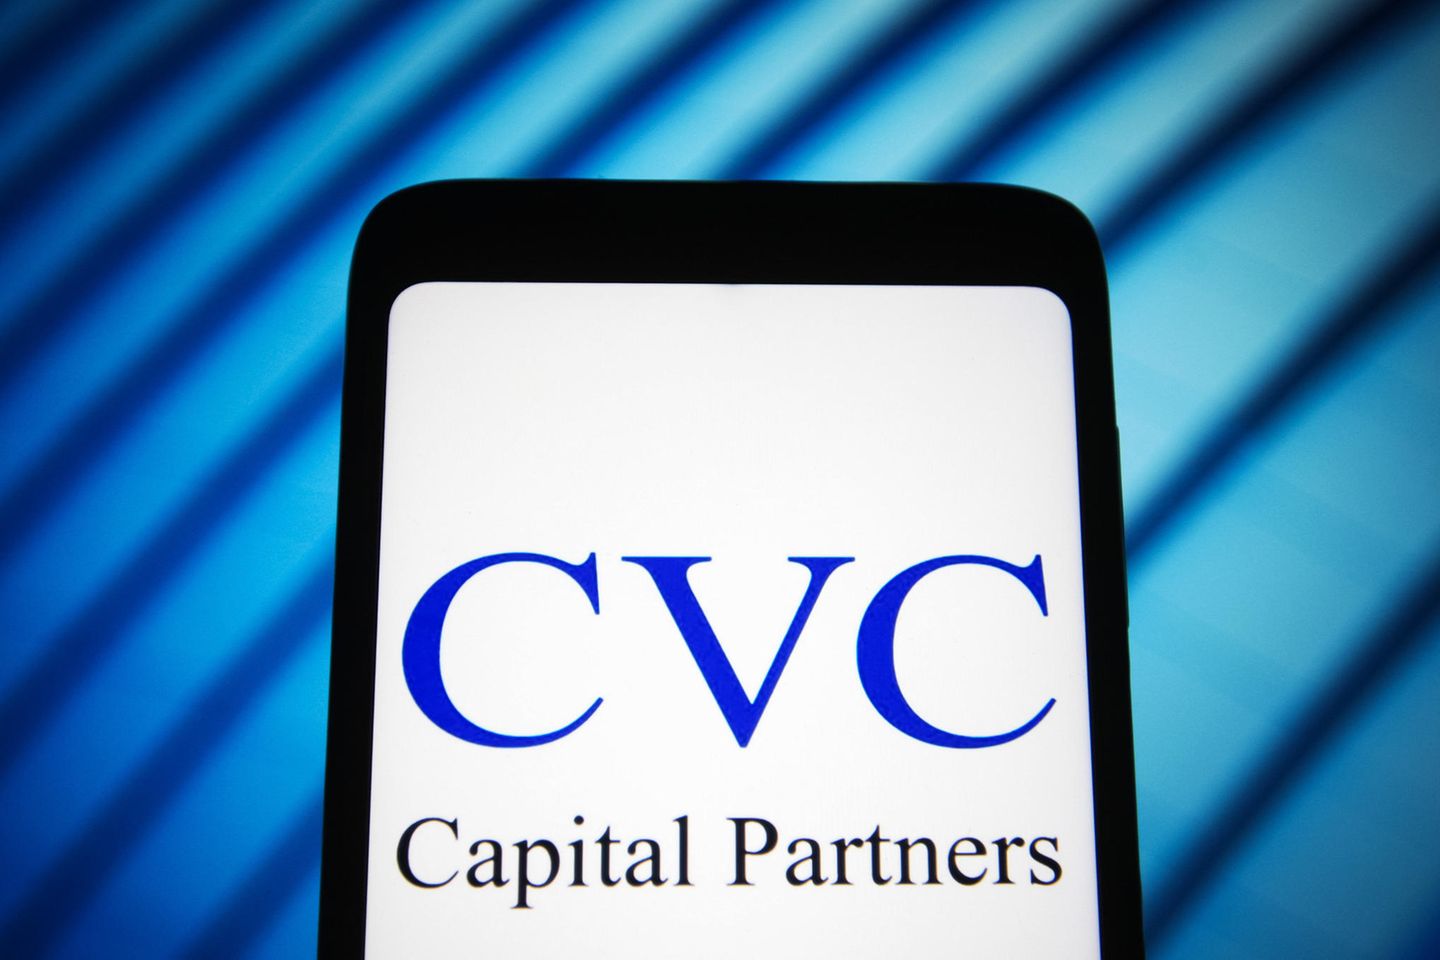 Über CVC Capital Partners ist nur wenig bekannt